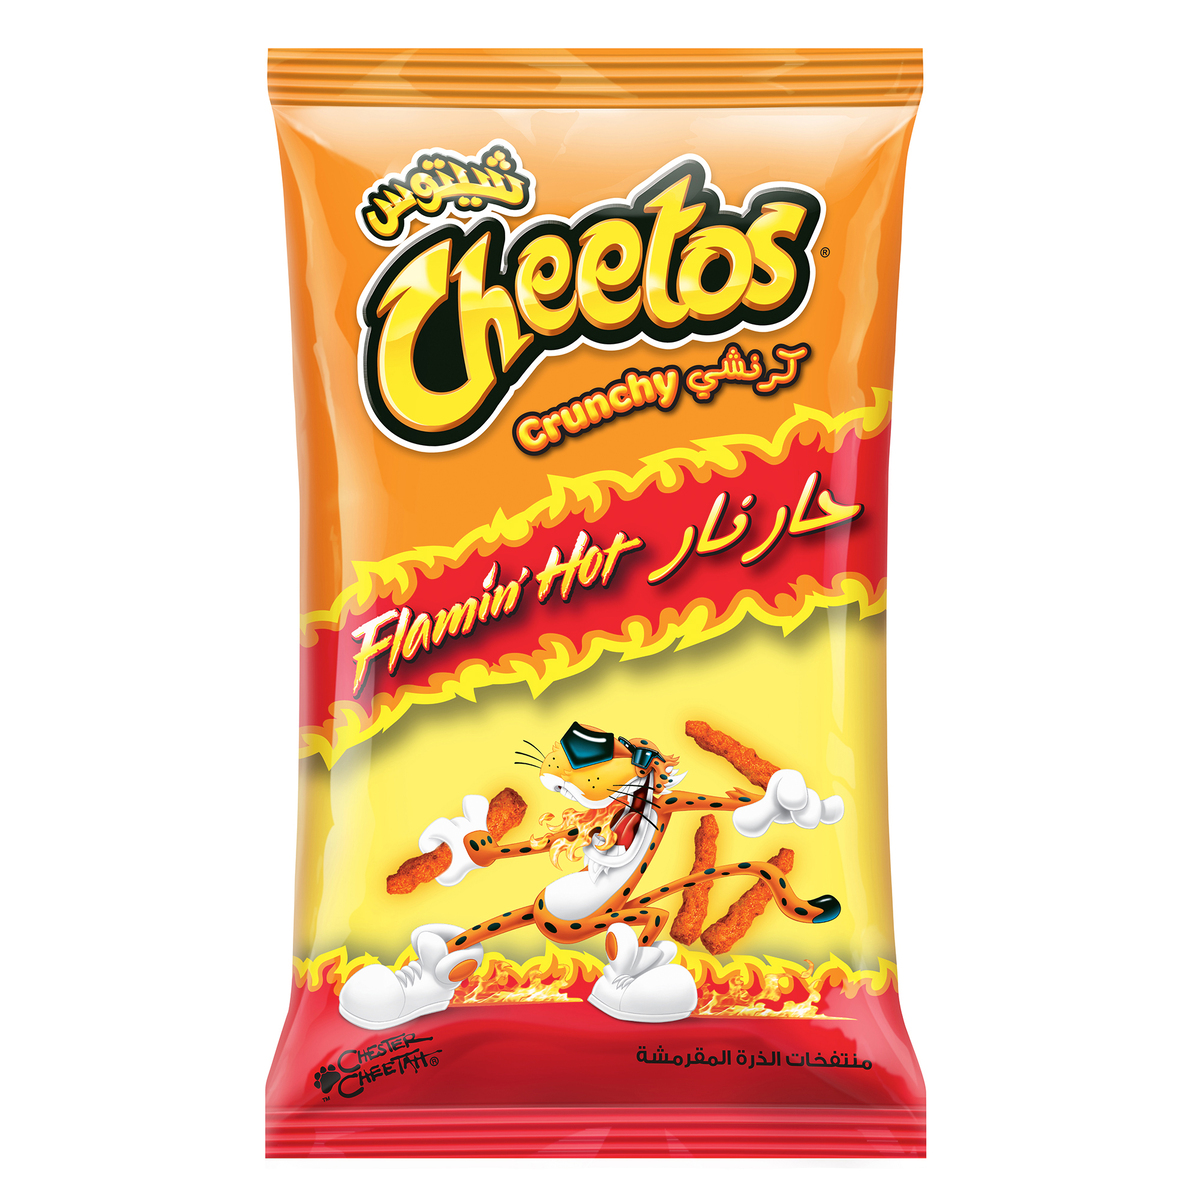 Cheetos Crunchy Flamin' Hot 190 g